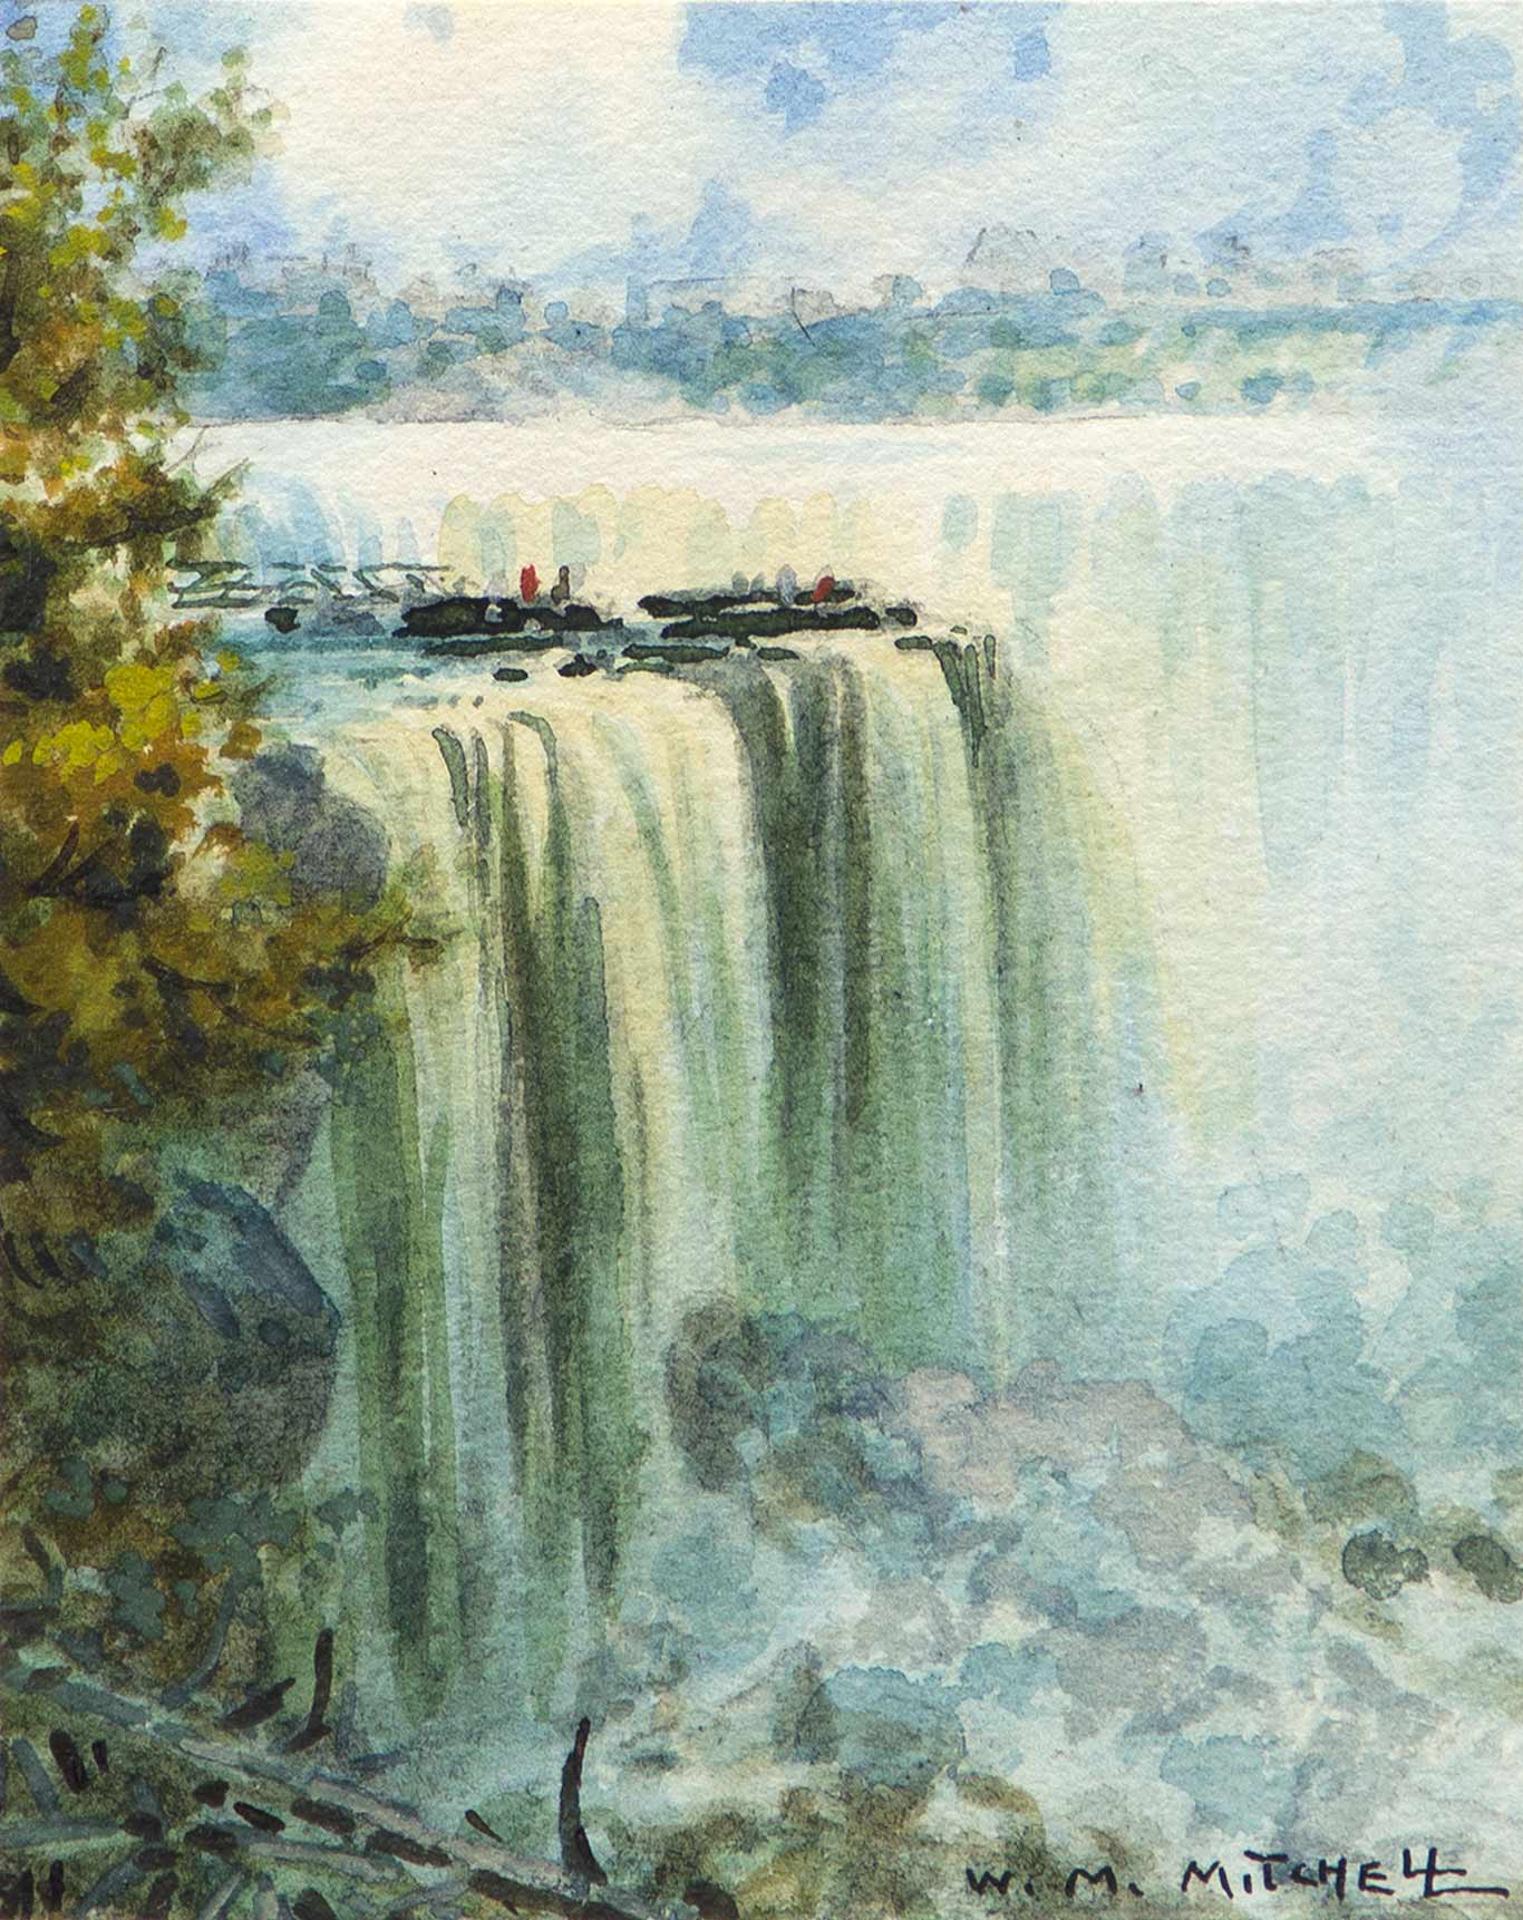 Willard Morse Mitchell (1879-1955) - A View of the Famous Horseshoe Falls, Niagara Falls, 1948